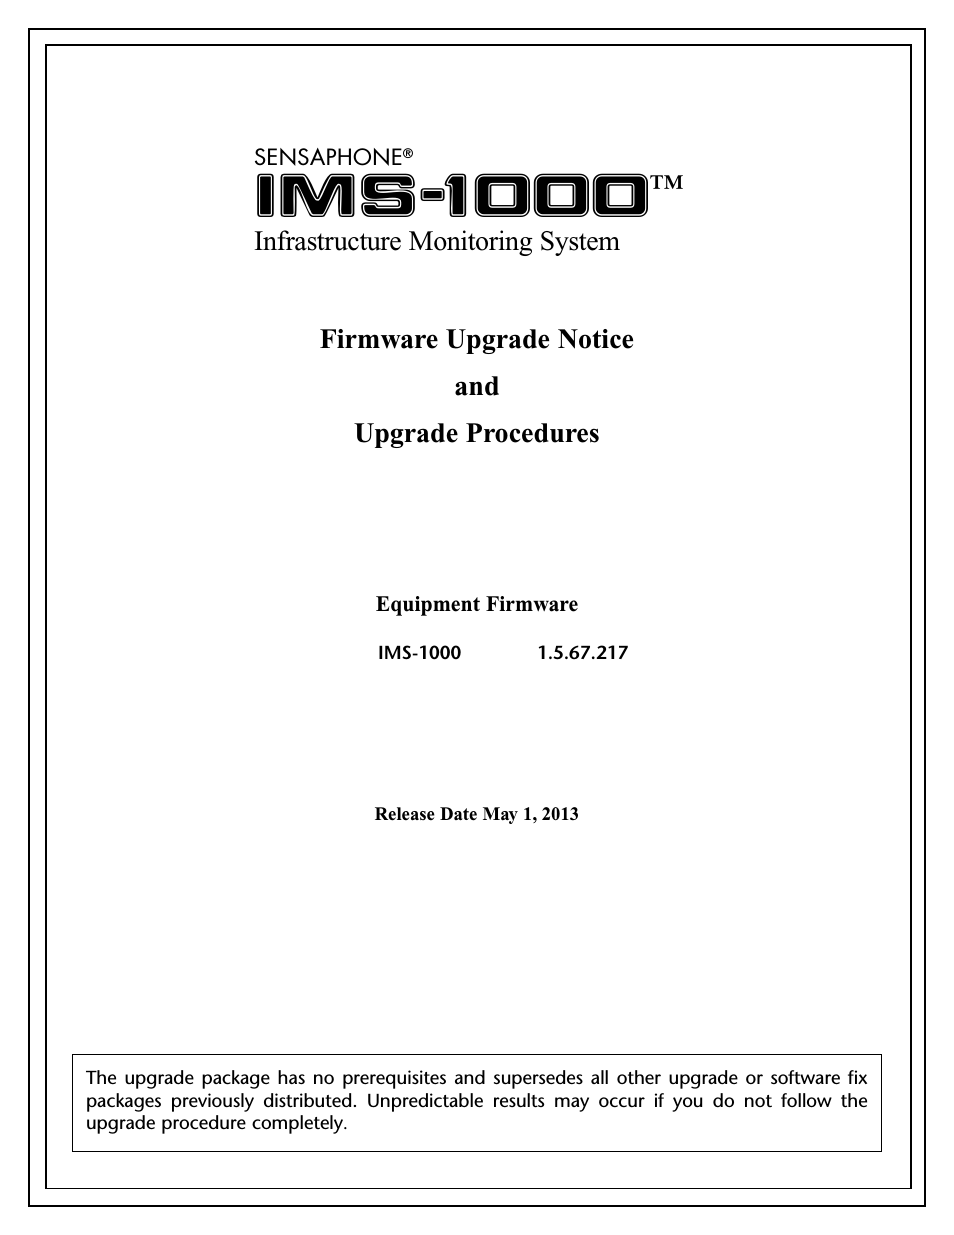 IMS-1000 Upgrade instructions